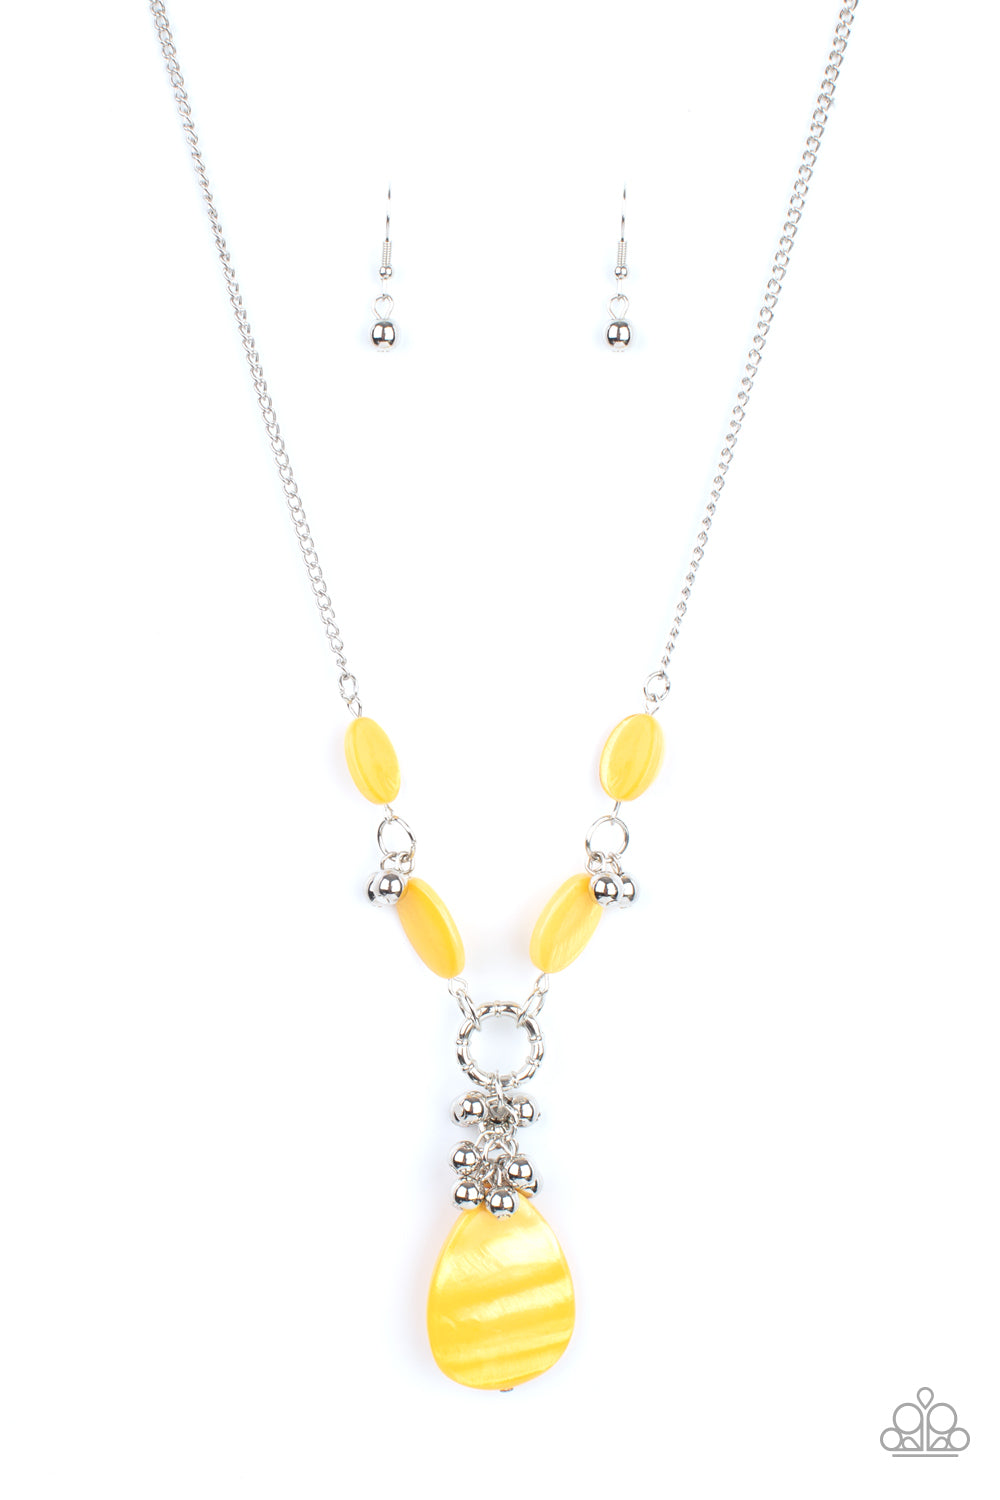 Summer Idol - Yellow Necklace Set - Princess Glam Shop